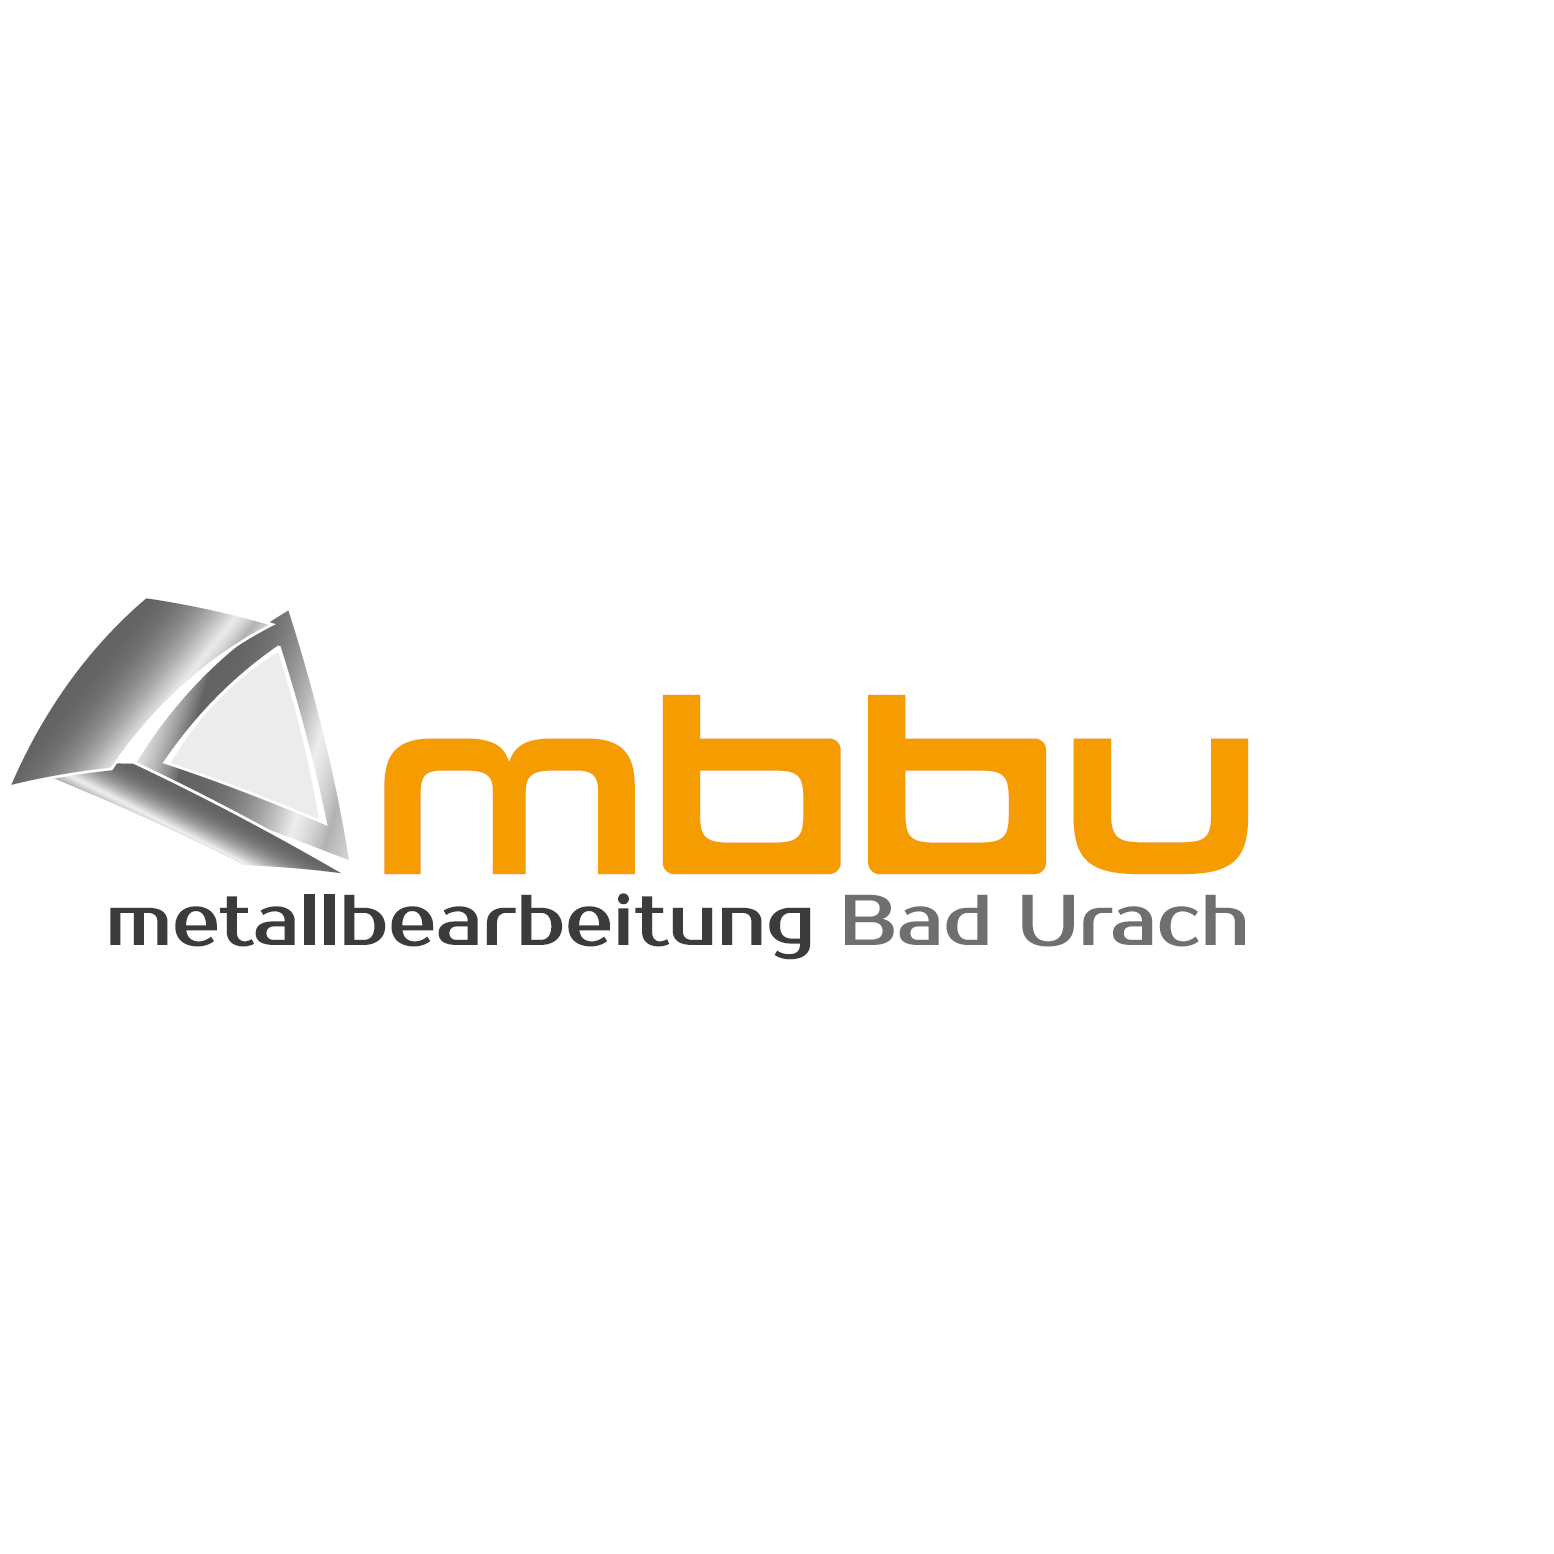 Logo MBBU Metallbearbeitung Bad Urach GmbH